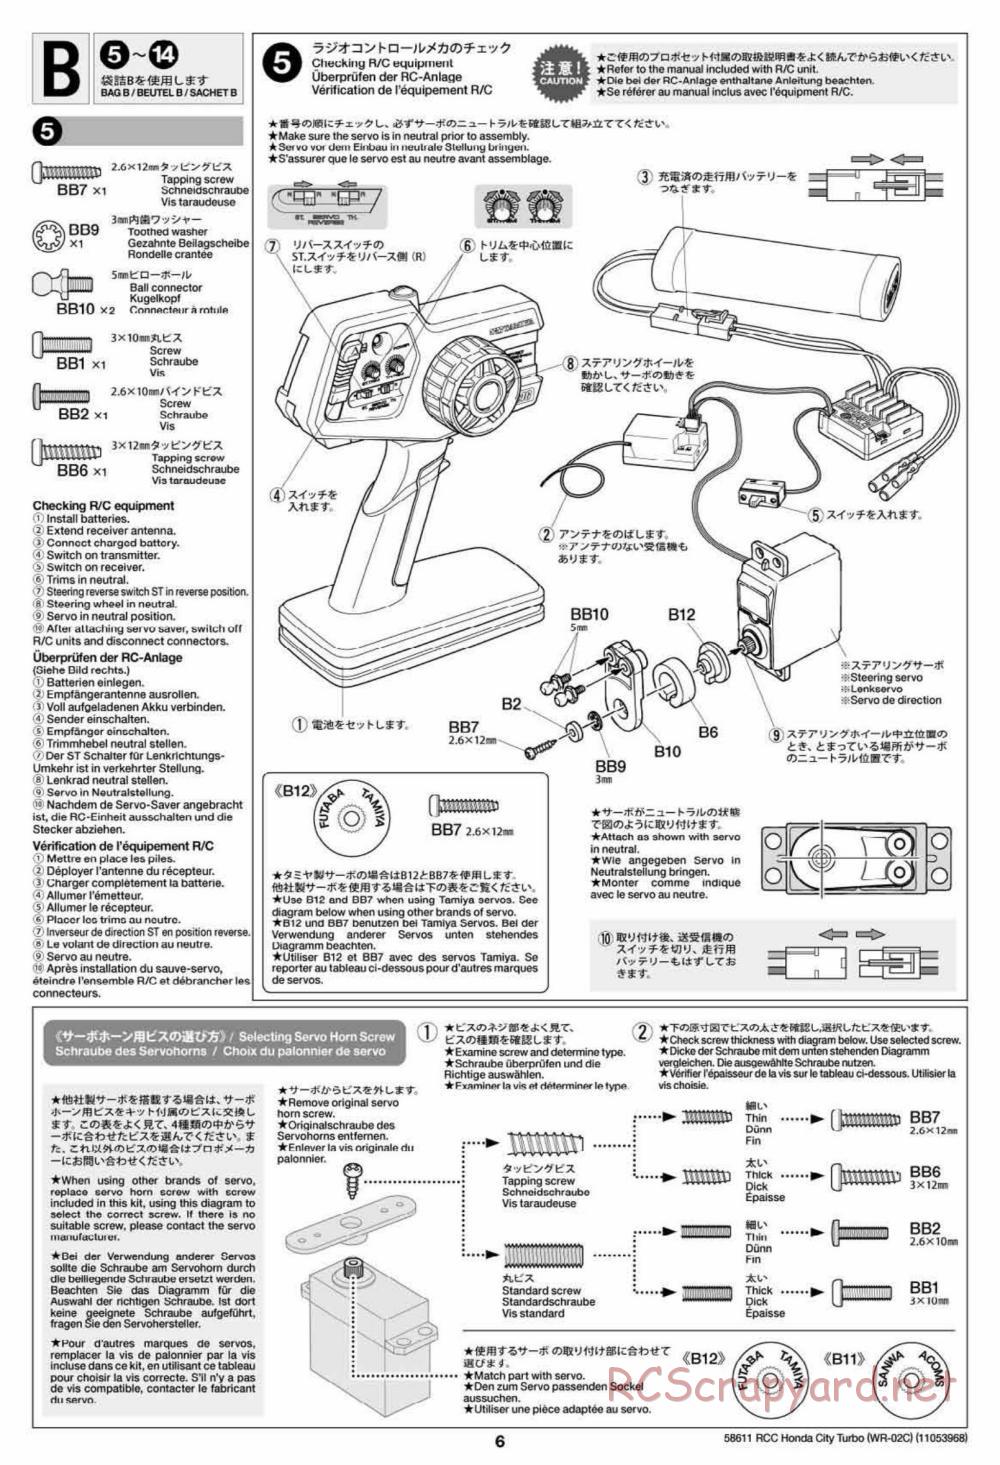 Tamiya - WR-02C Chassis - Manual - Page 6